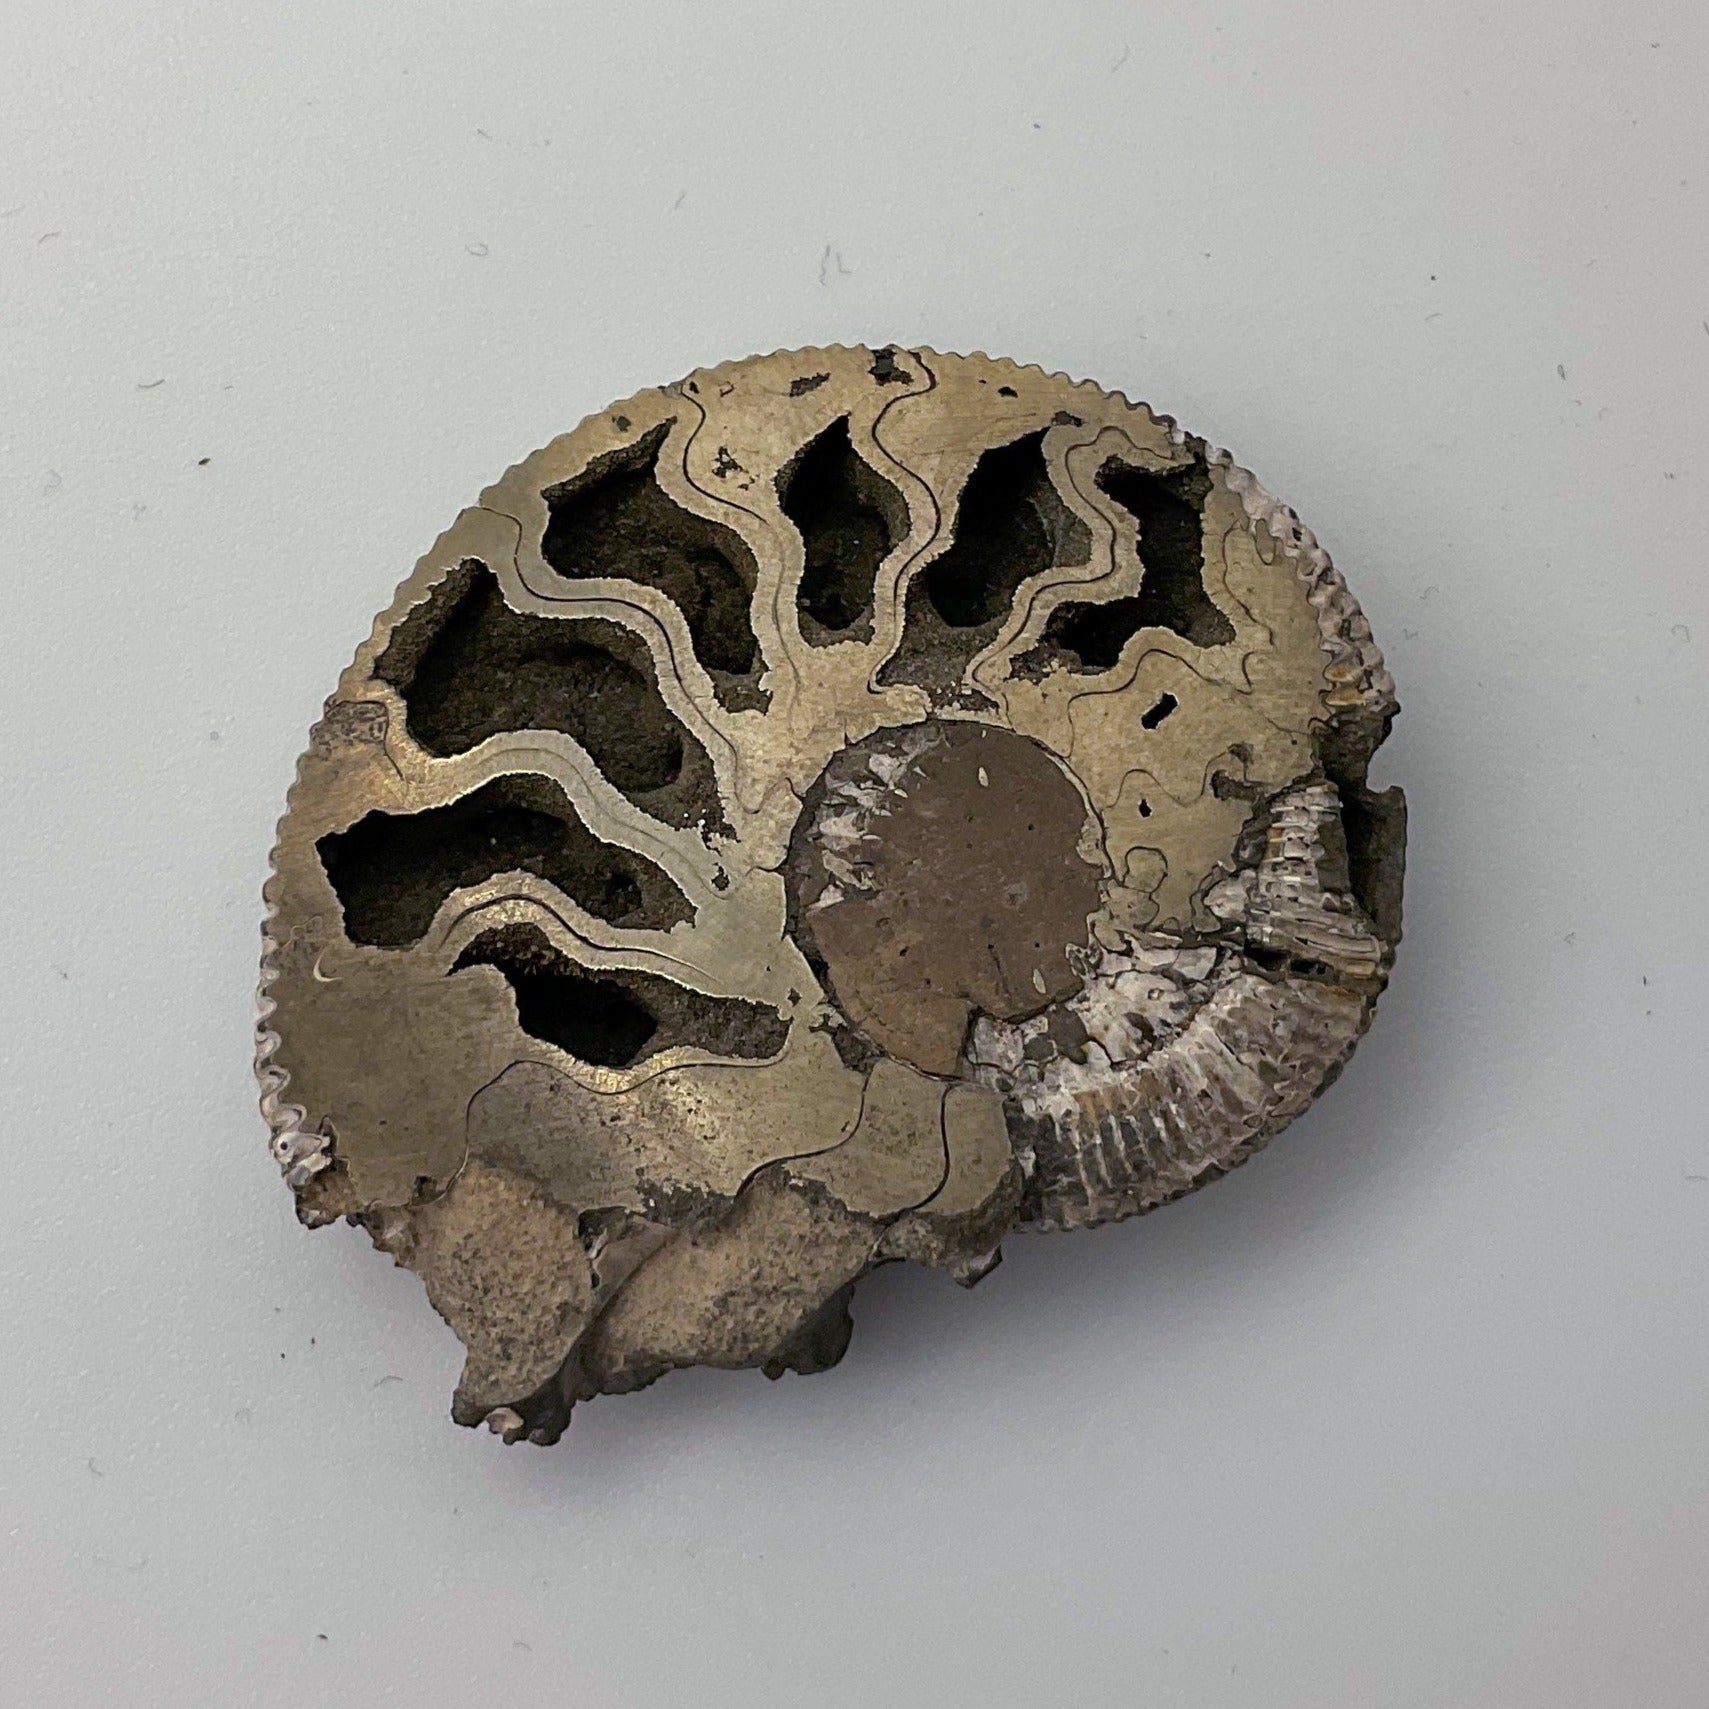 Pyritized Ammonite Half Specimen